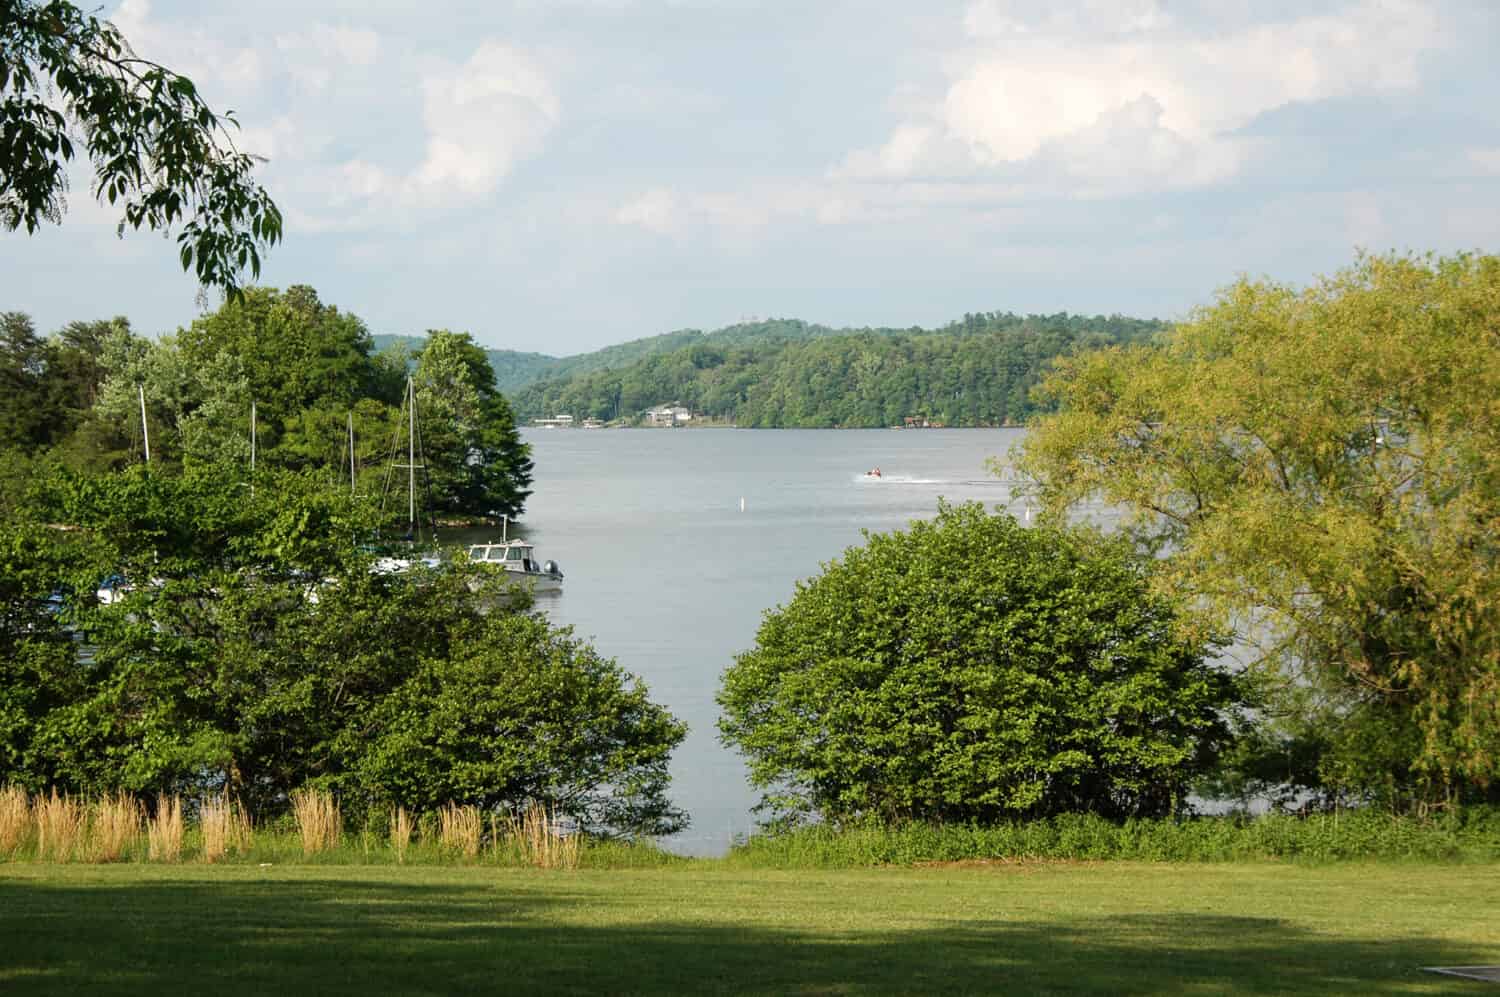 Claytor lake in Southern Virginia near Blacksburg in Dublin, Virginia